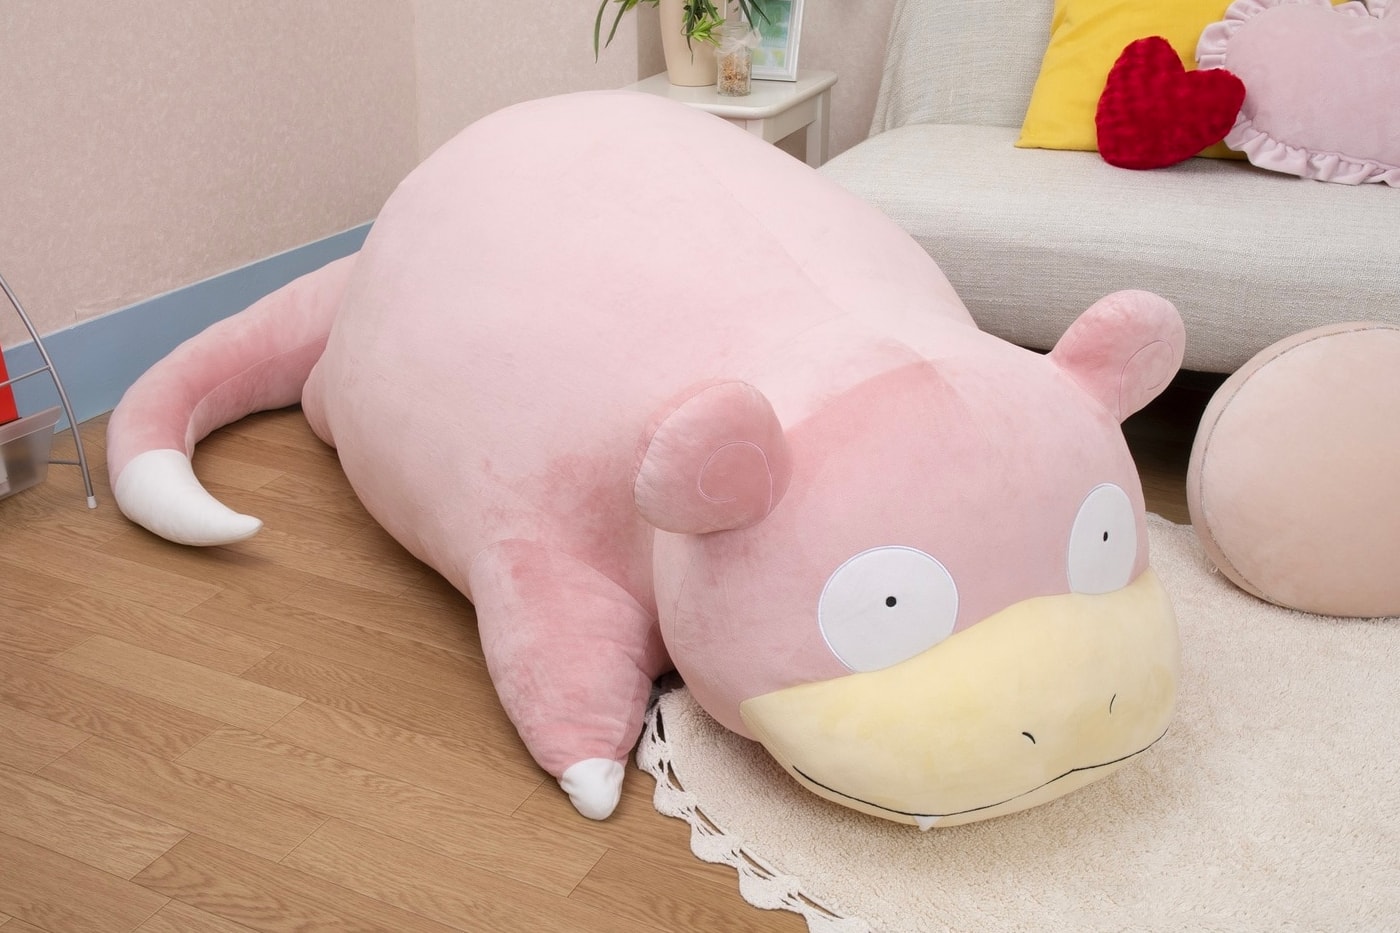 Pokemon Life Size Slowpoke Cushion Release pillows home nintendo gamefreak soft cute plush 